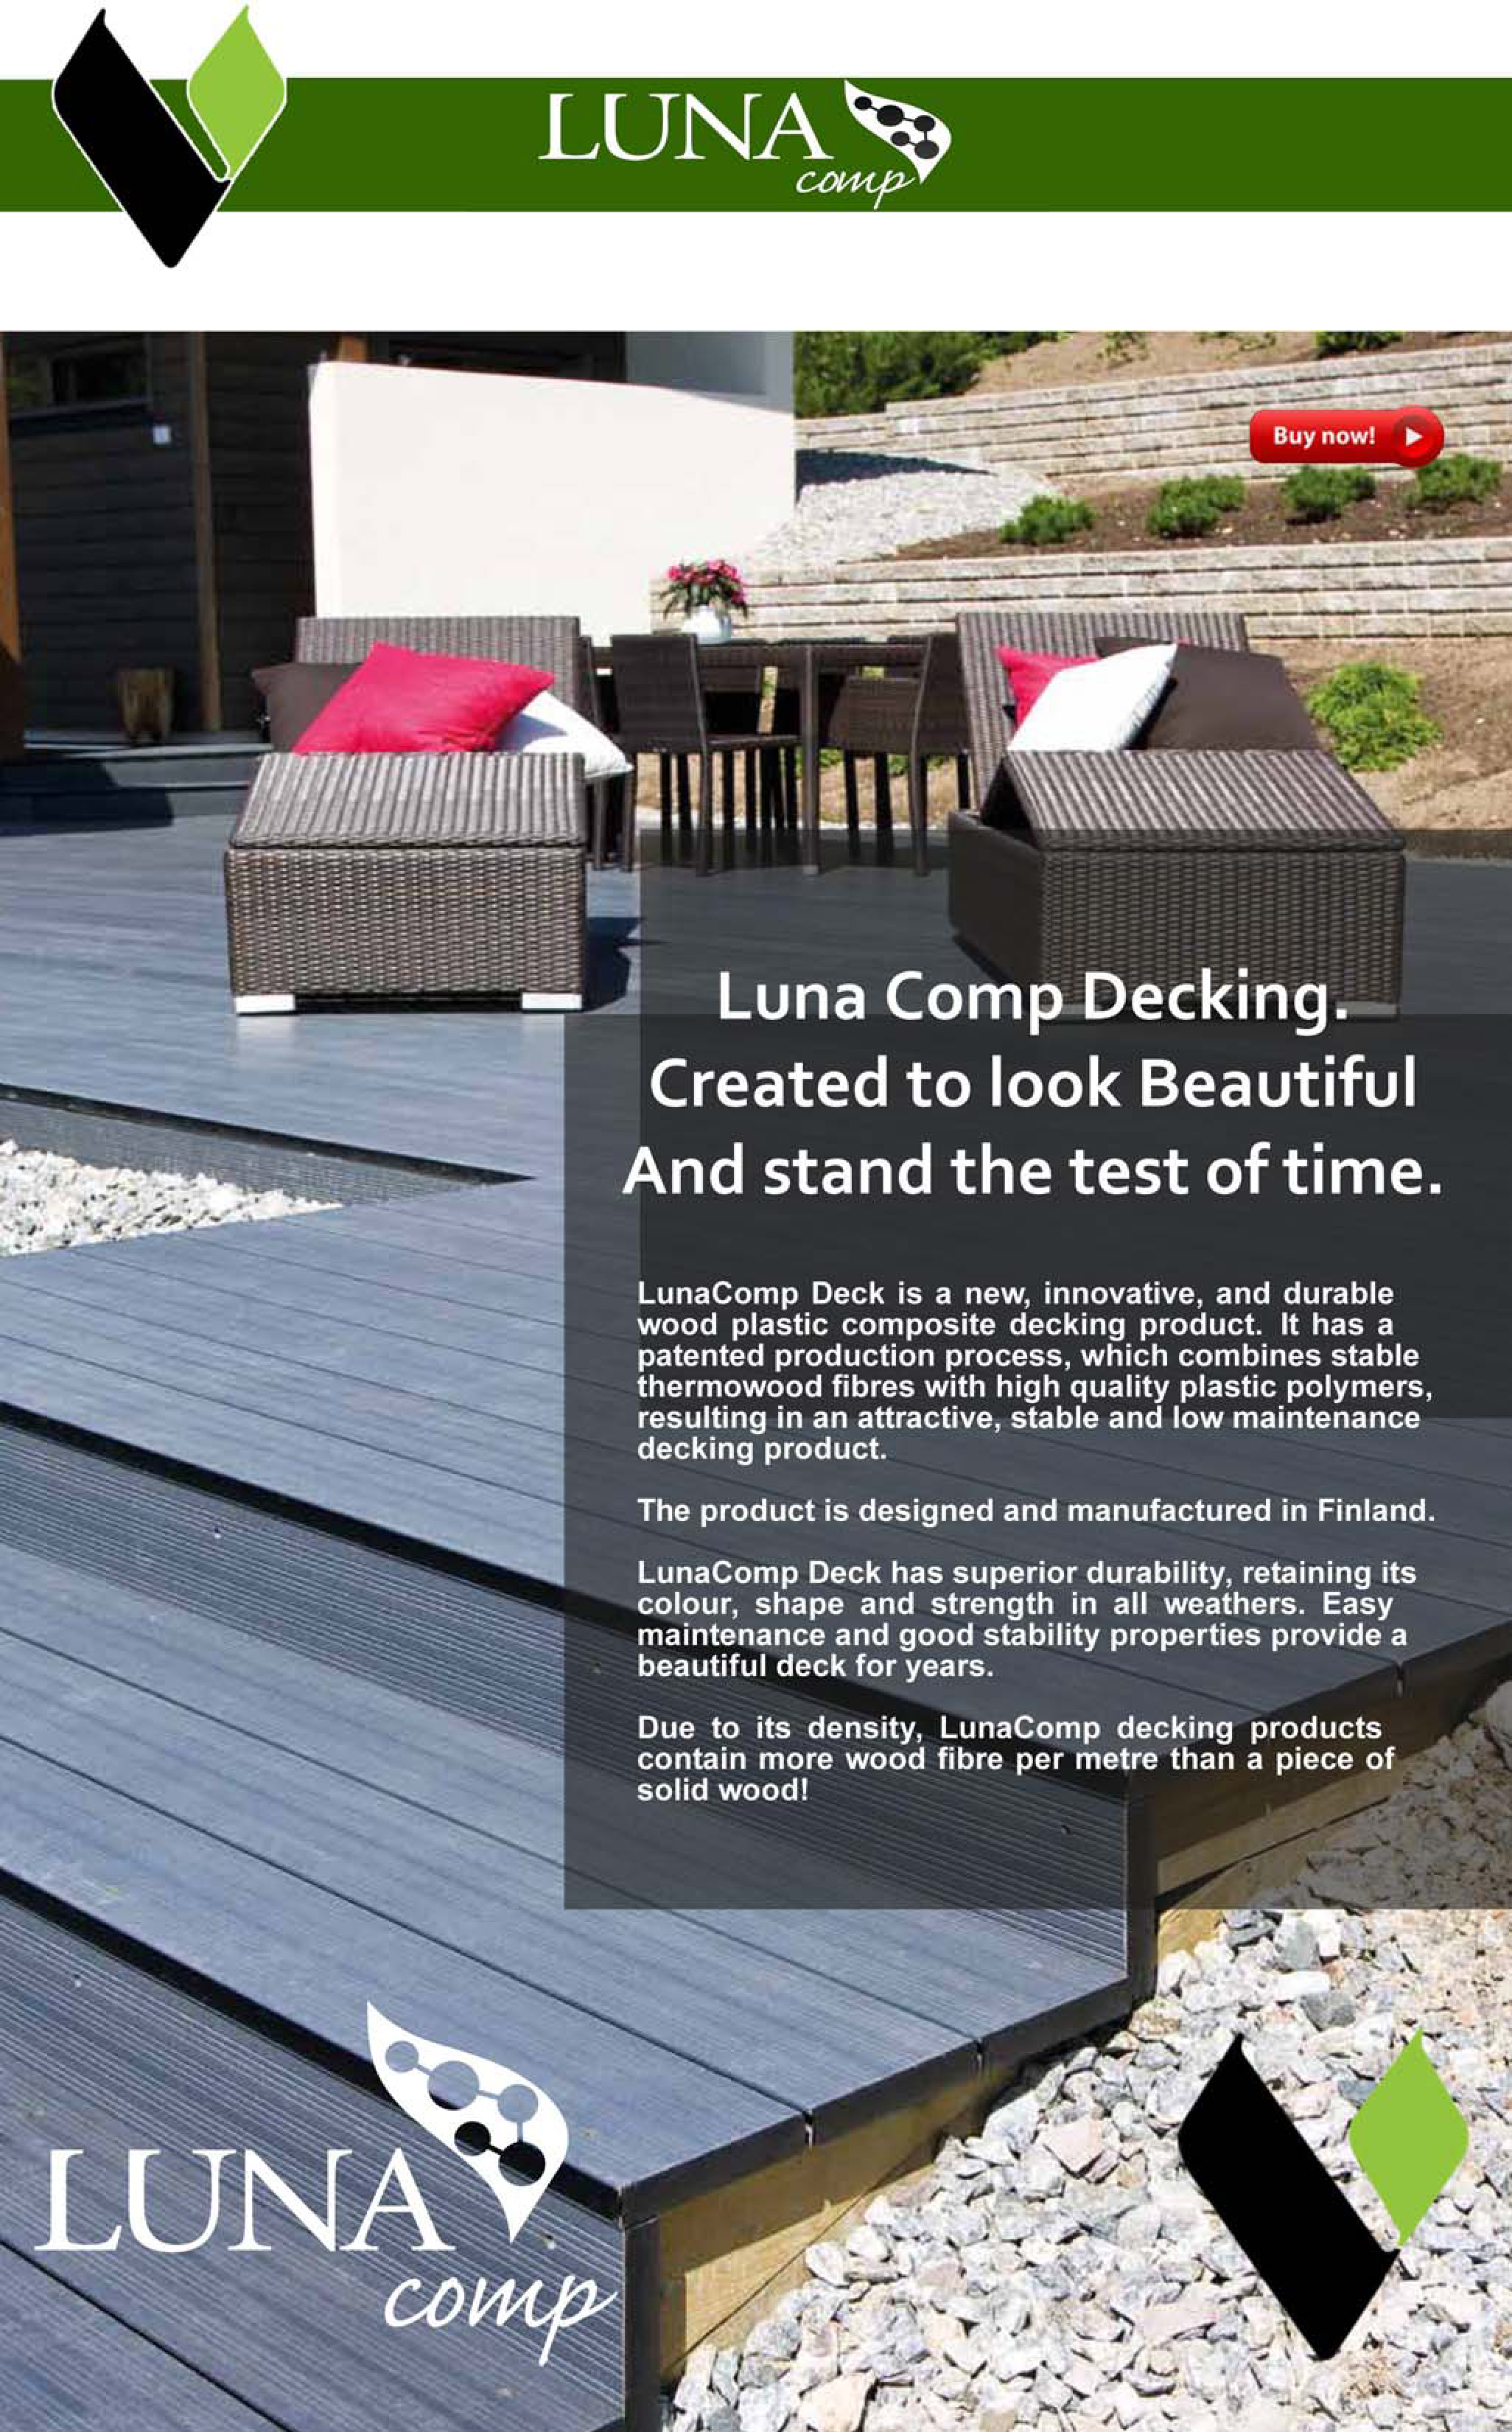 Overview of Luna Comp Decking